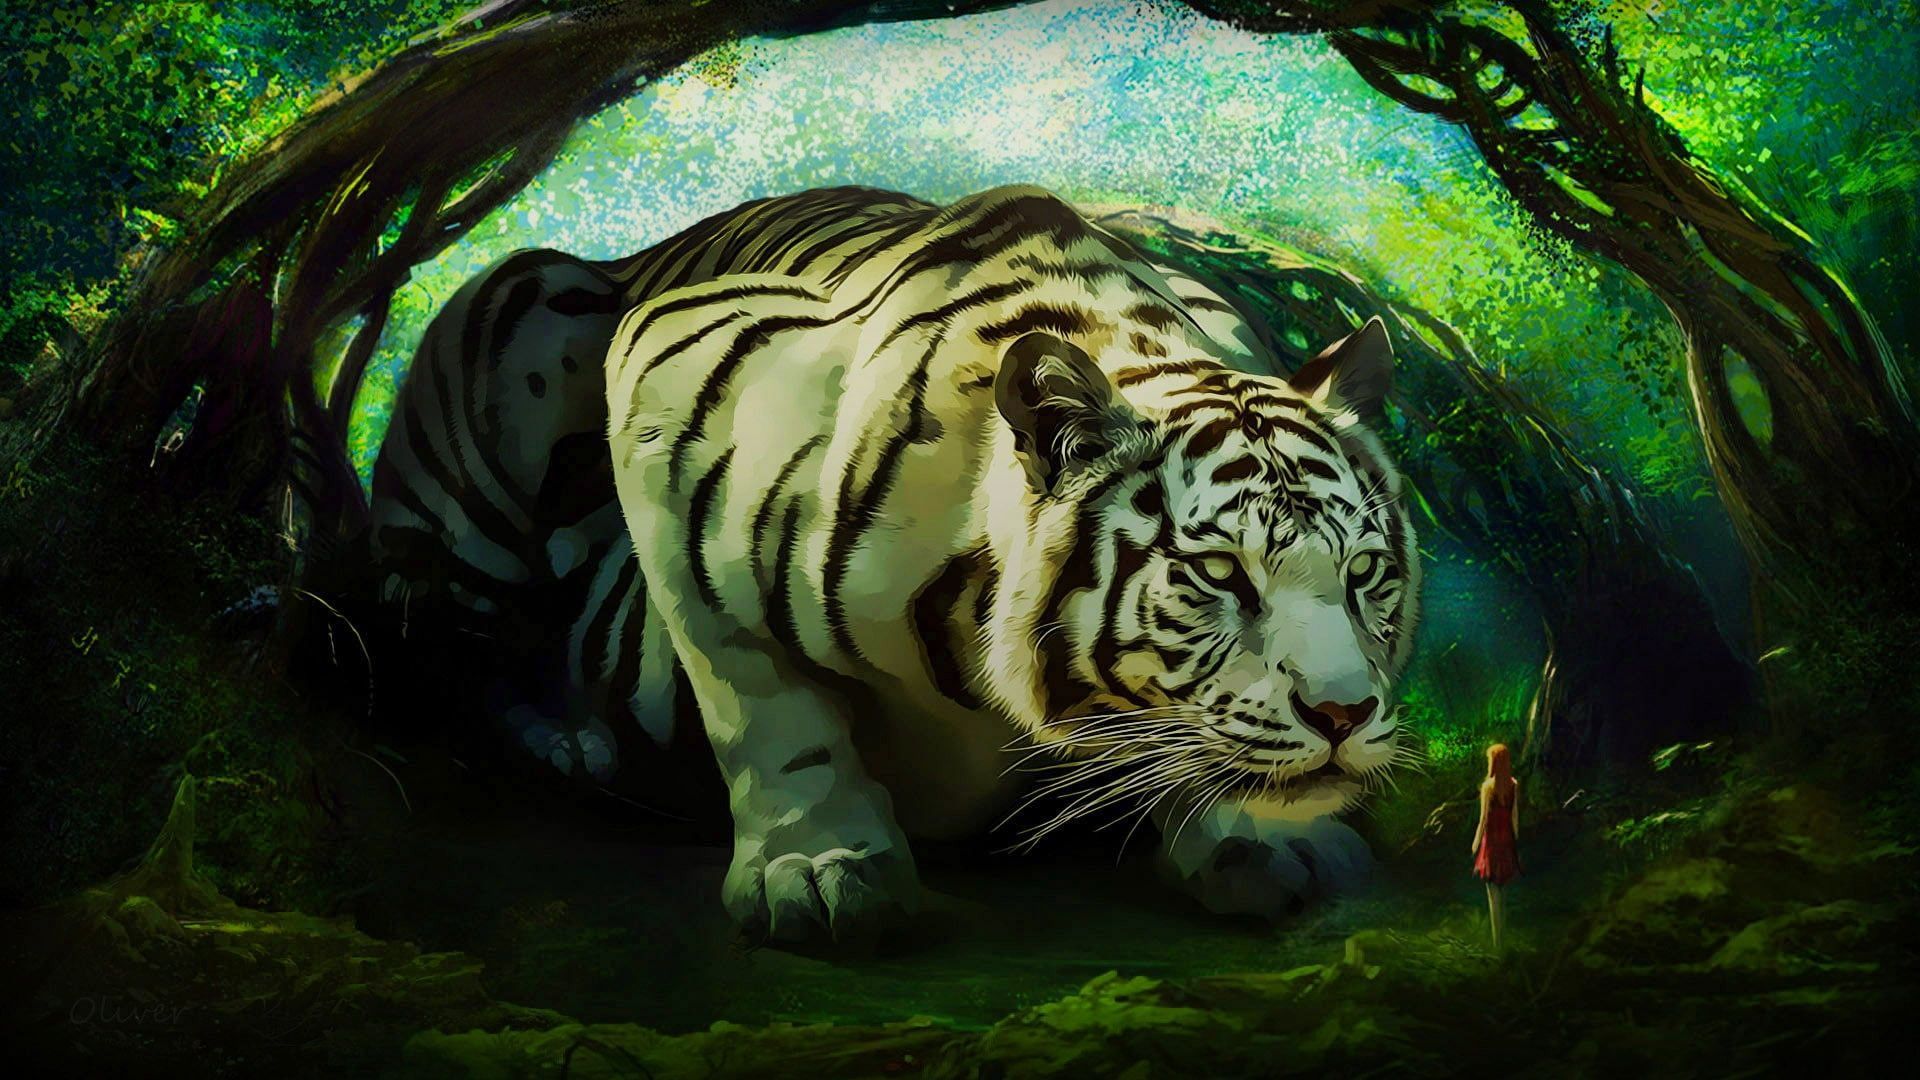 digital art #women #tiger #forest #giant fantasy art #illustration P # wallpaper #hdwallpaper #desktop